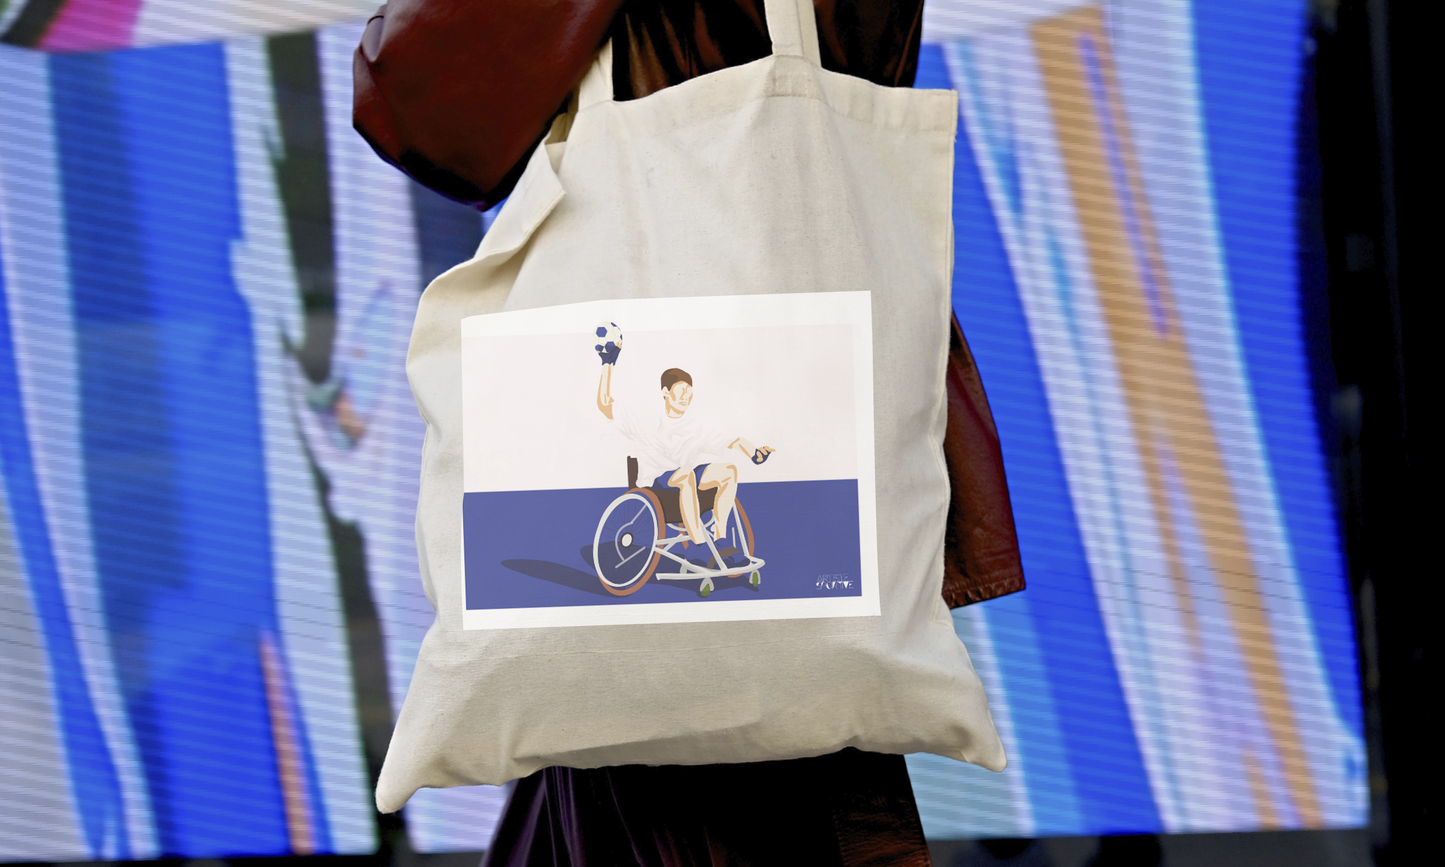 Tote bag or handchair bag “Handball in blue”